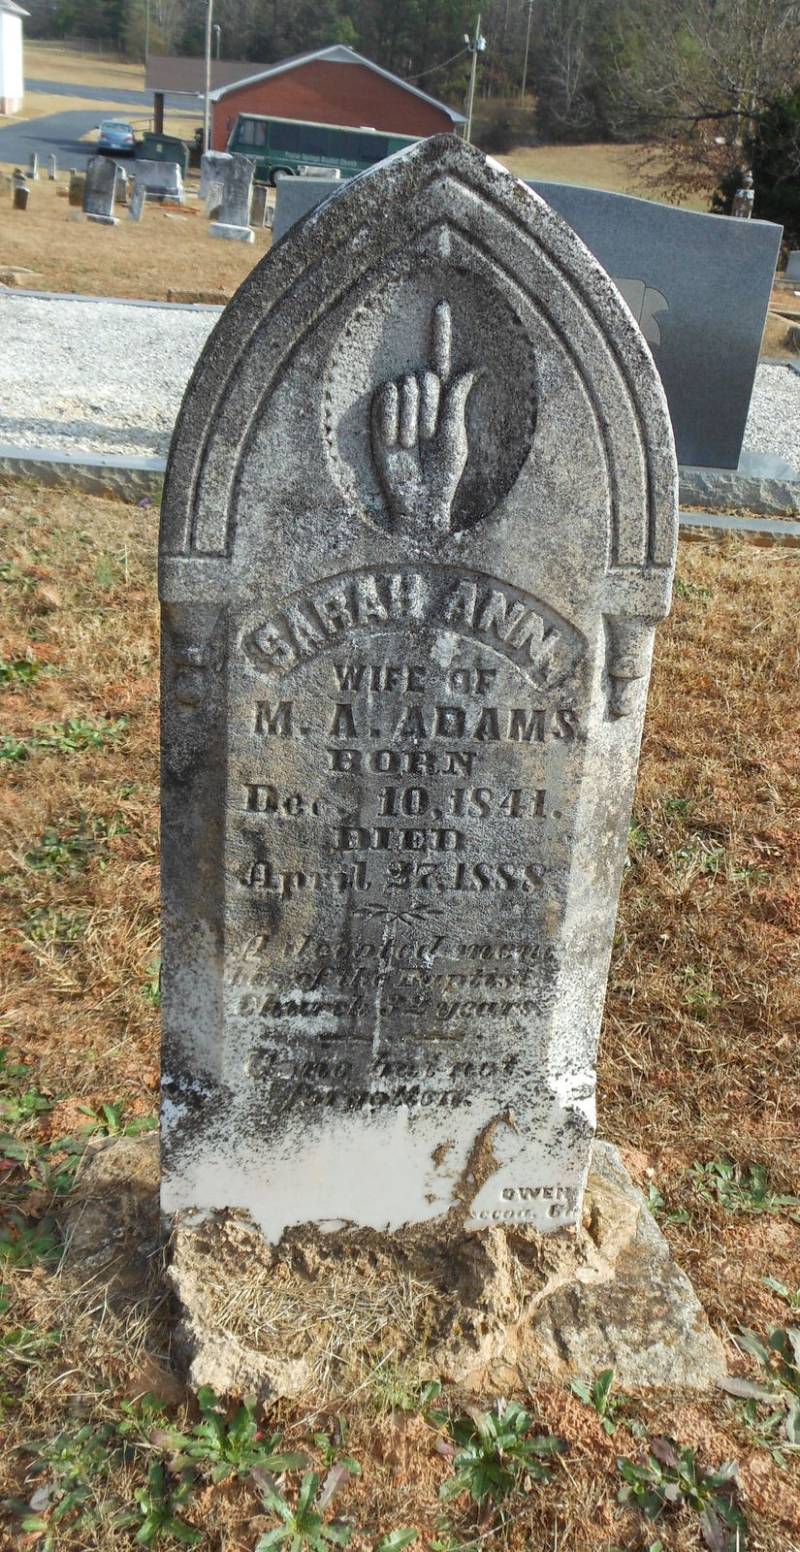 Inscribed: "Sarah Ann - Wife of M.A. Adams. Born Dec. 10, 1841. Died April 27, 1888."